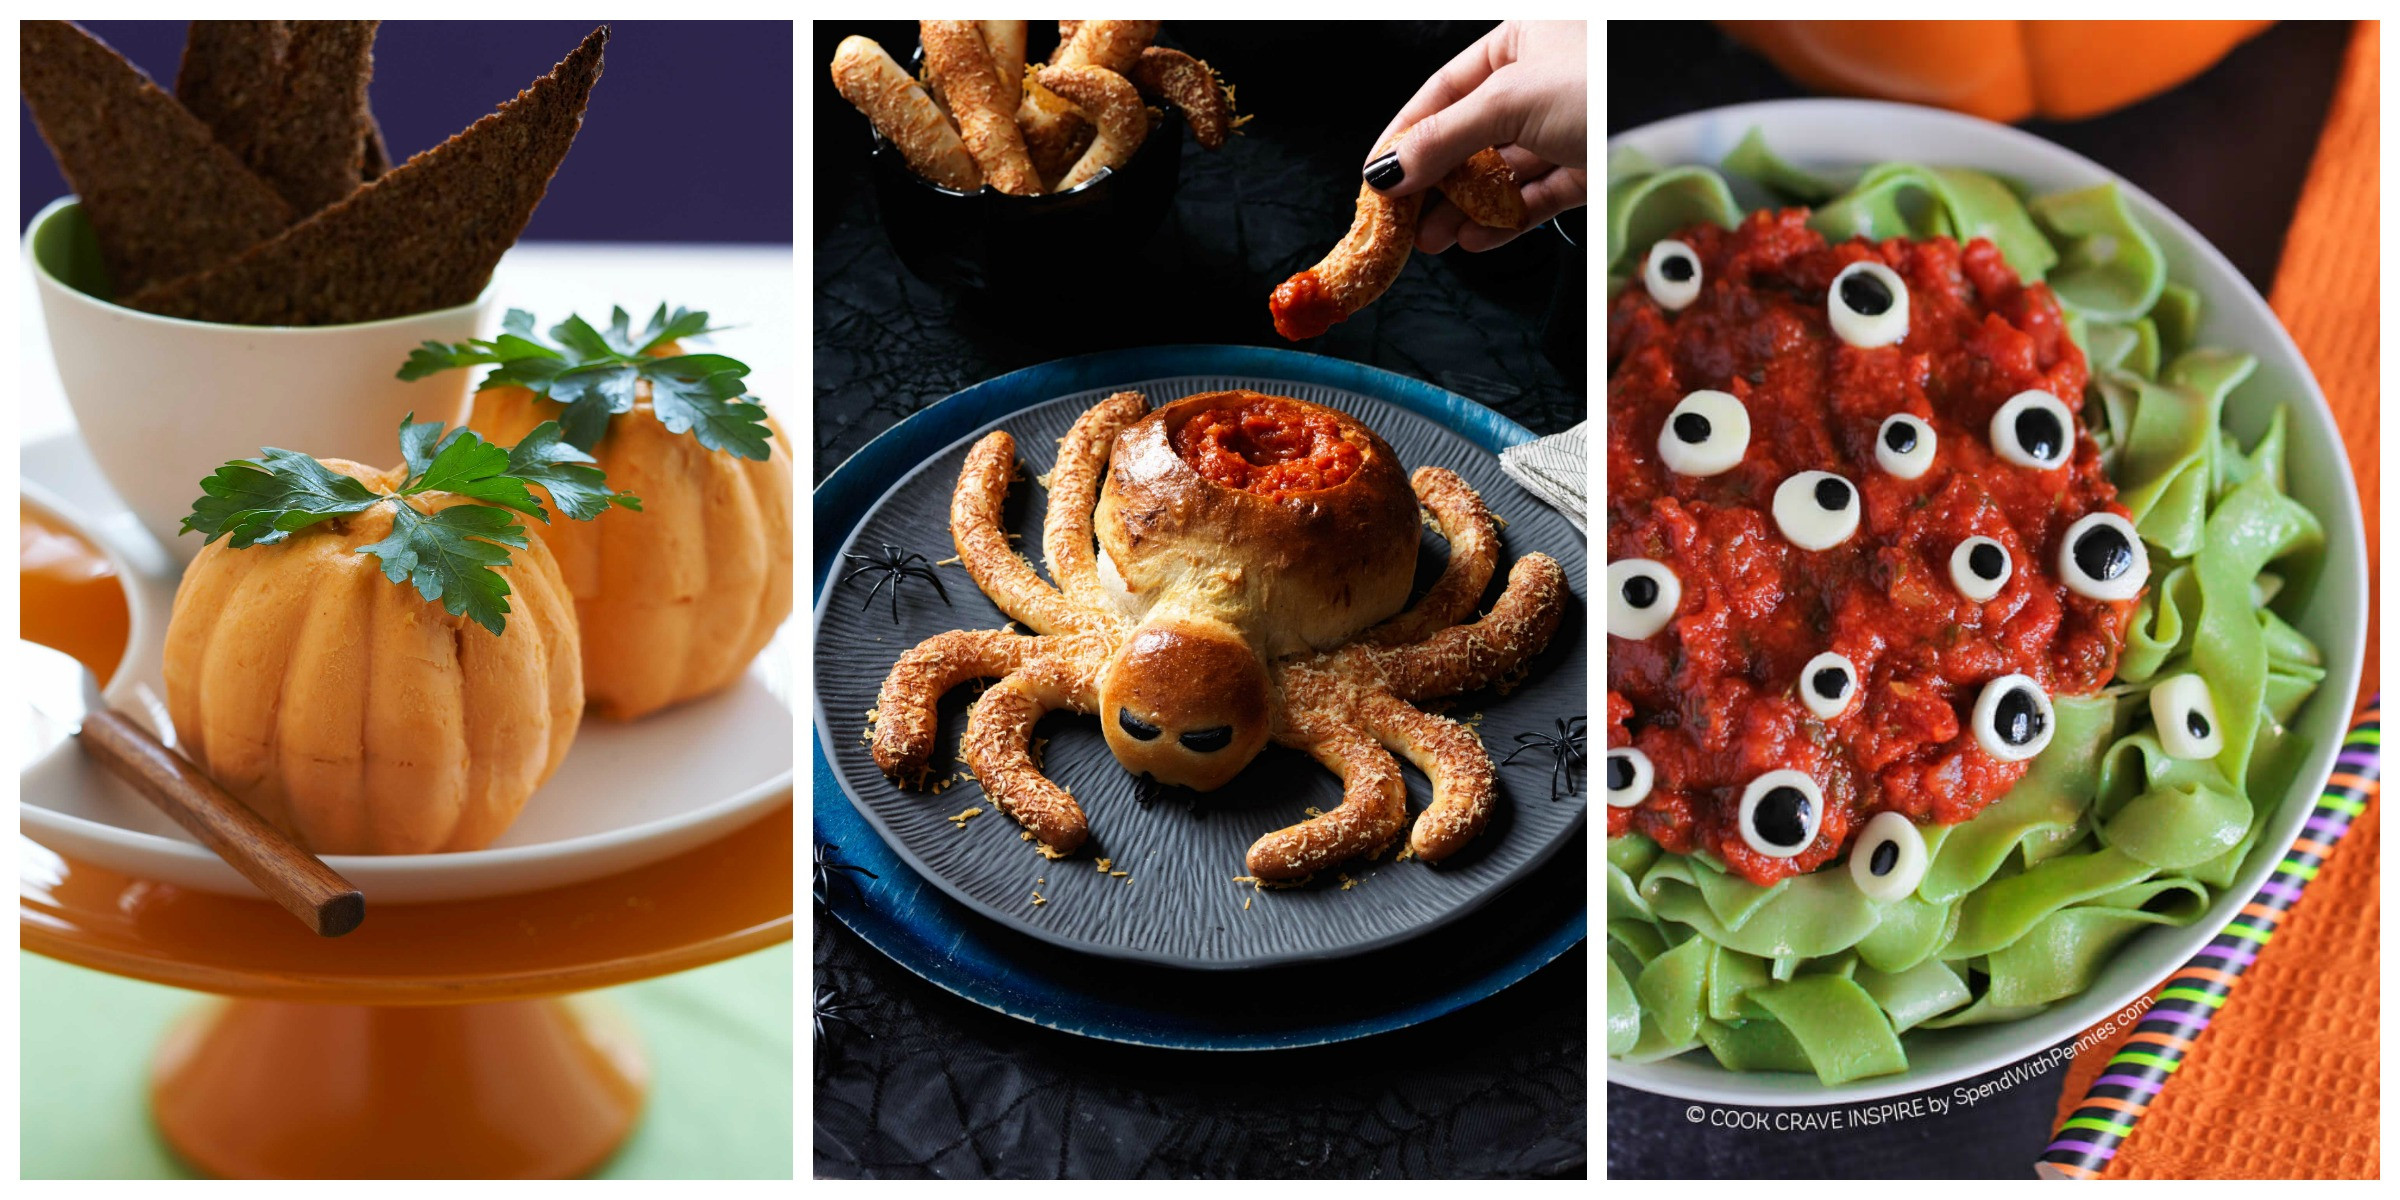 Dinner Ideas For Halloween Party
 25 Spooky Halloween Dinner Ideas Best Recipes for